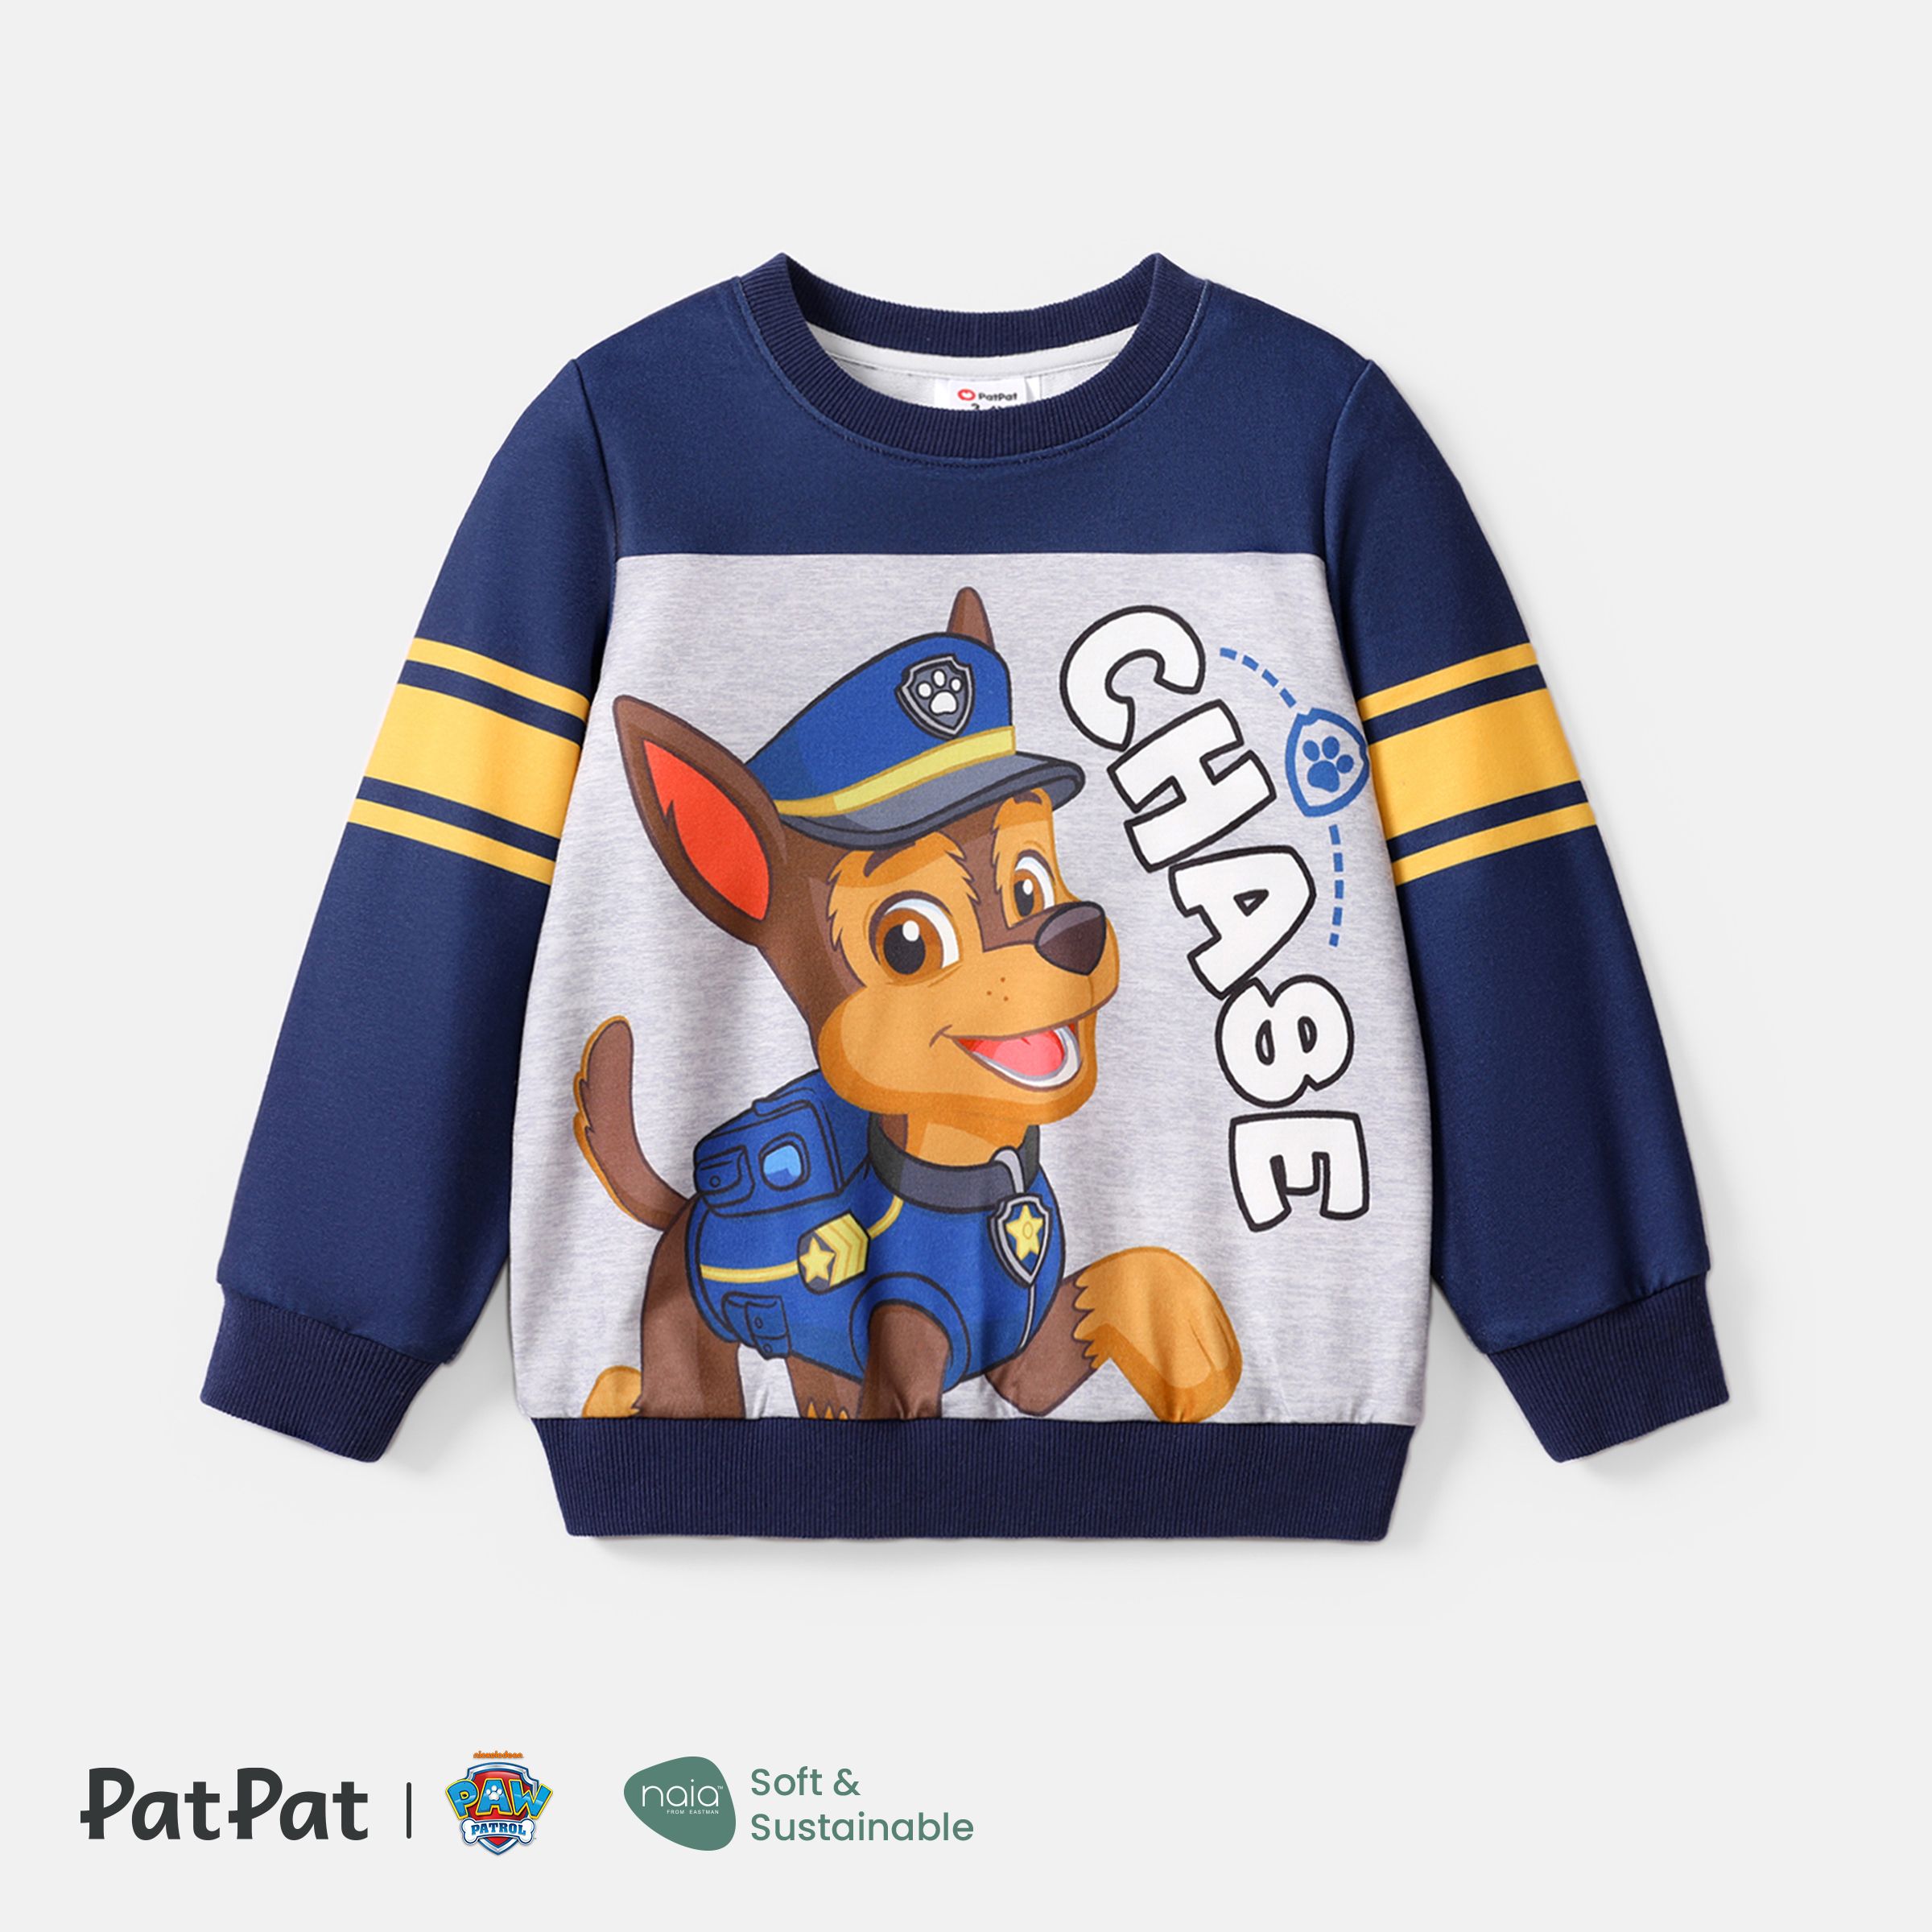 PAW Patrol Toddler Girl/Boy Naiaâ¢ Character Print Pullover Sweatshirt